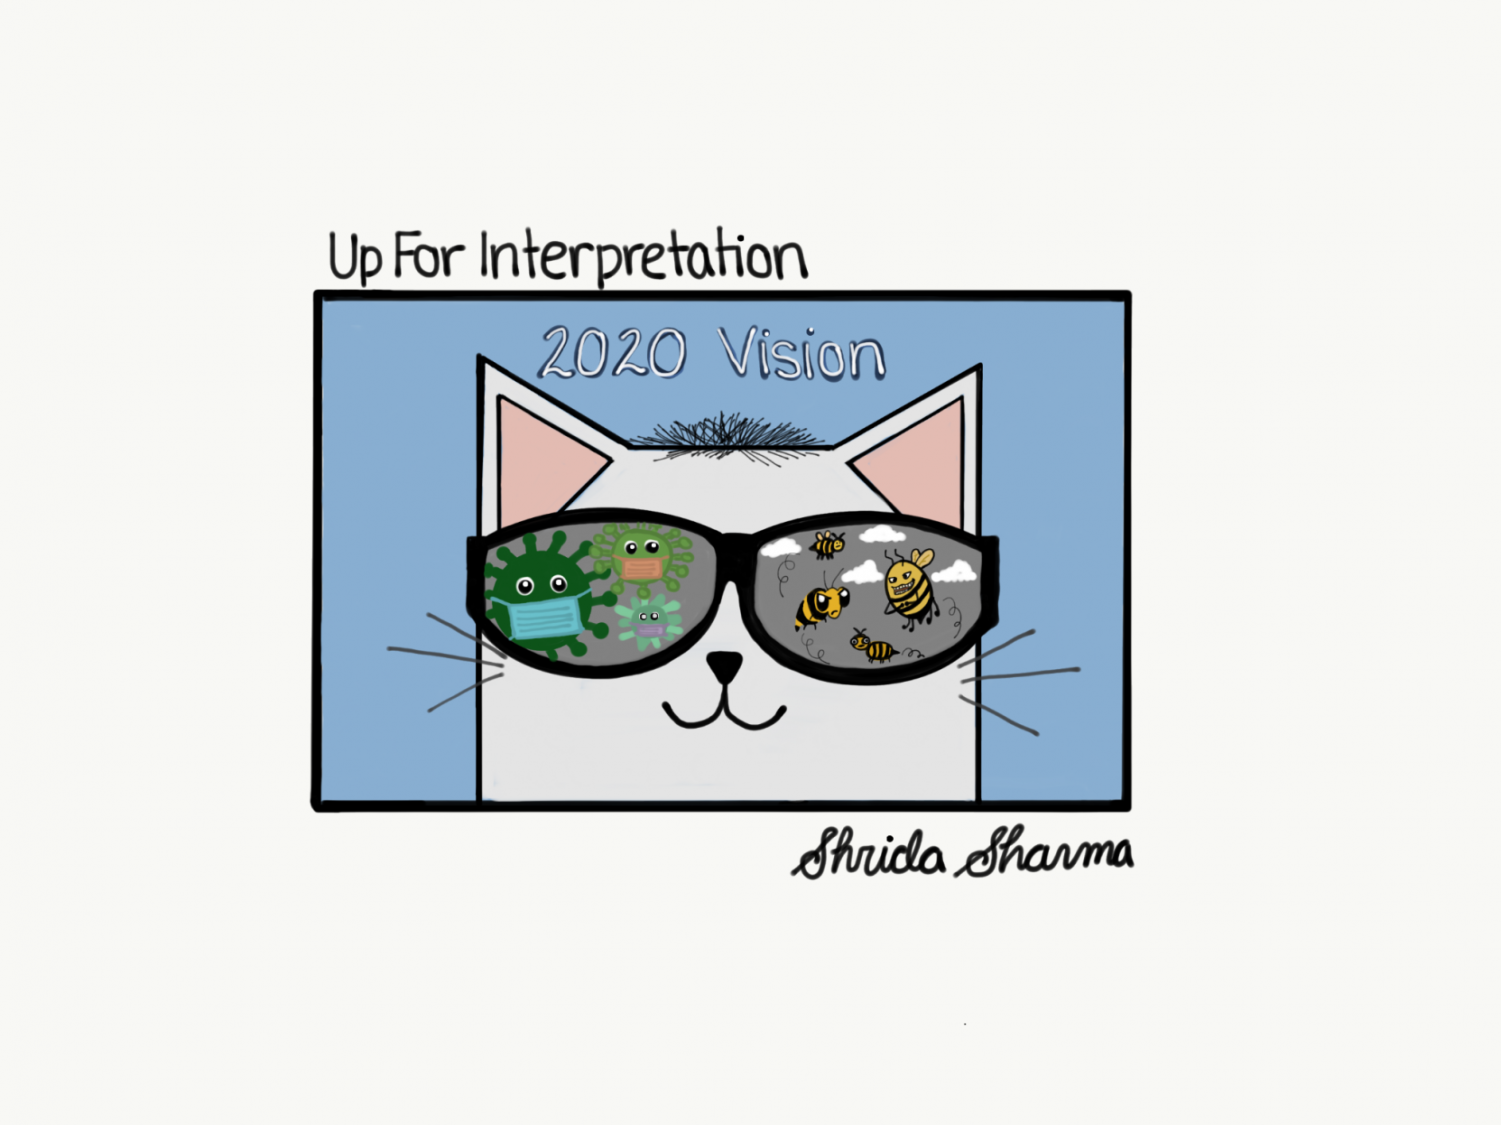 Up For Interpretation: 2020 Vision